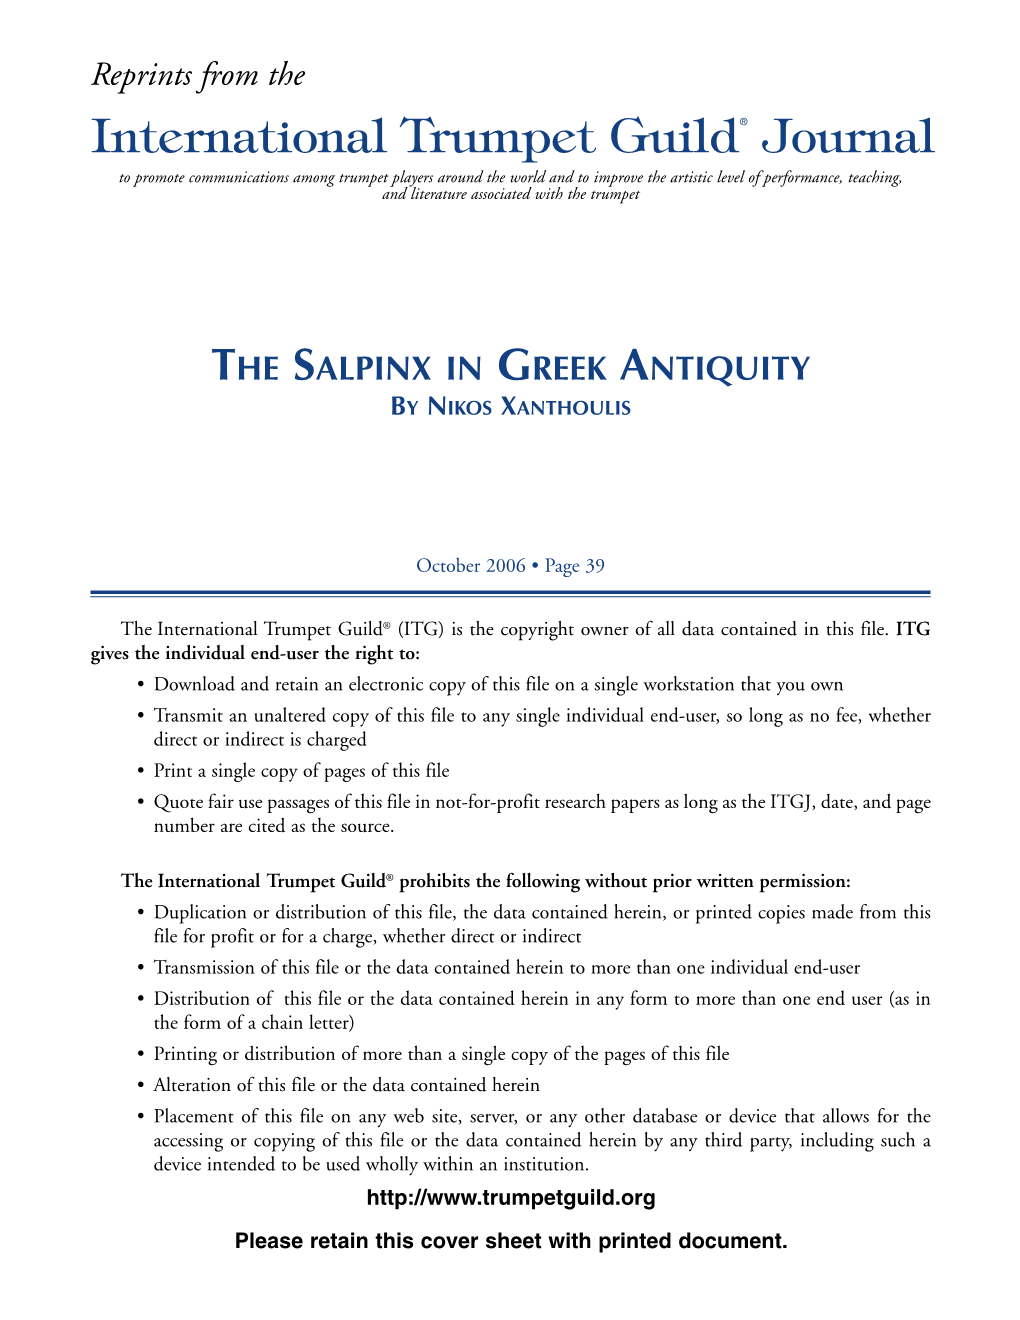 The Salpinx in Greek Antiquity by Nikos Xanthoulis